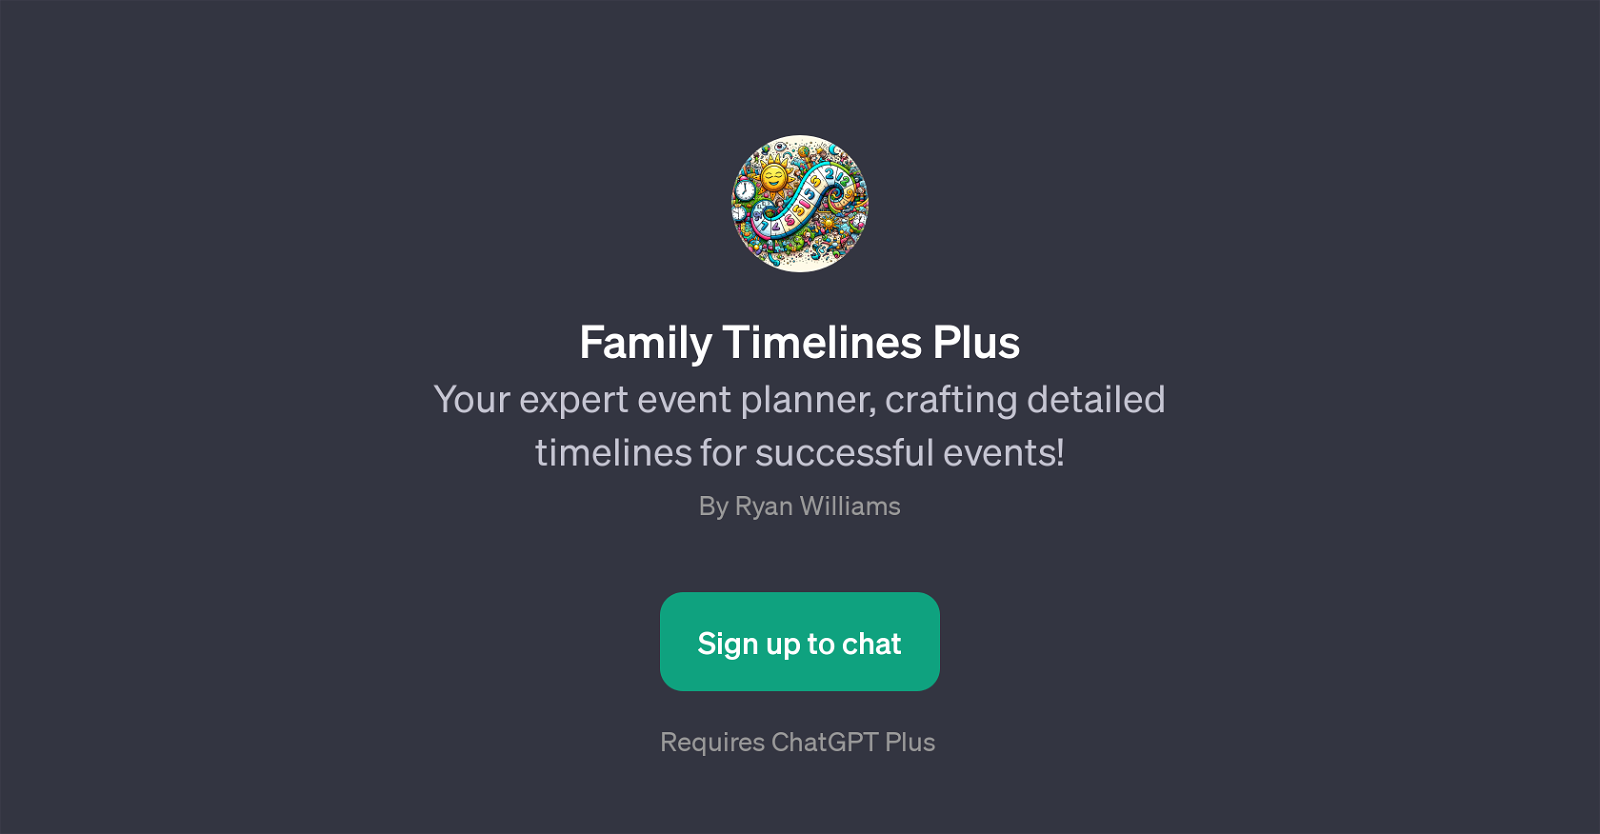 Family Timelines Plus website